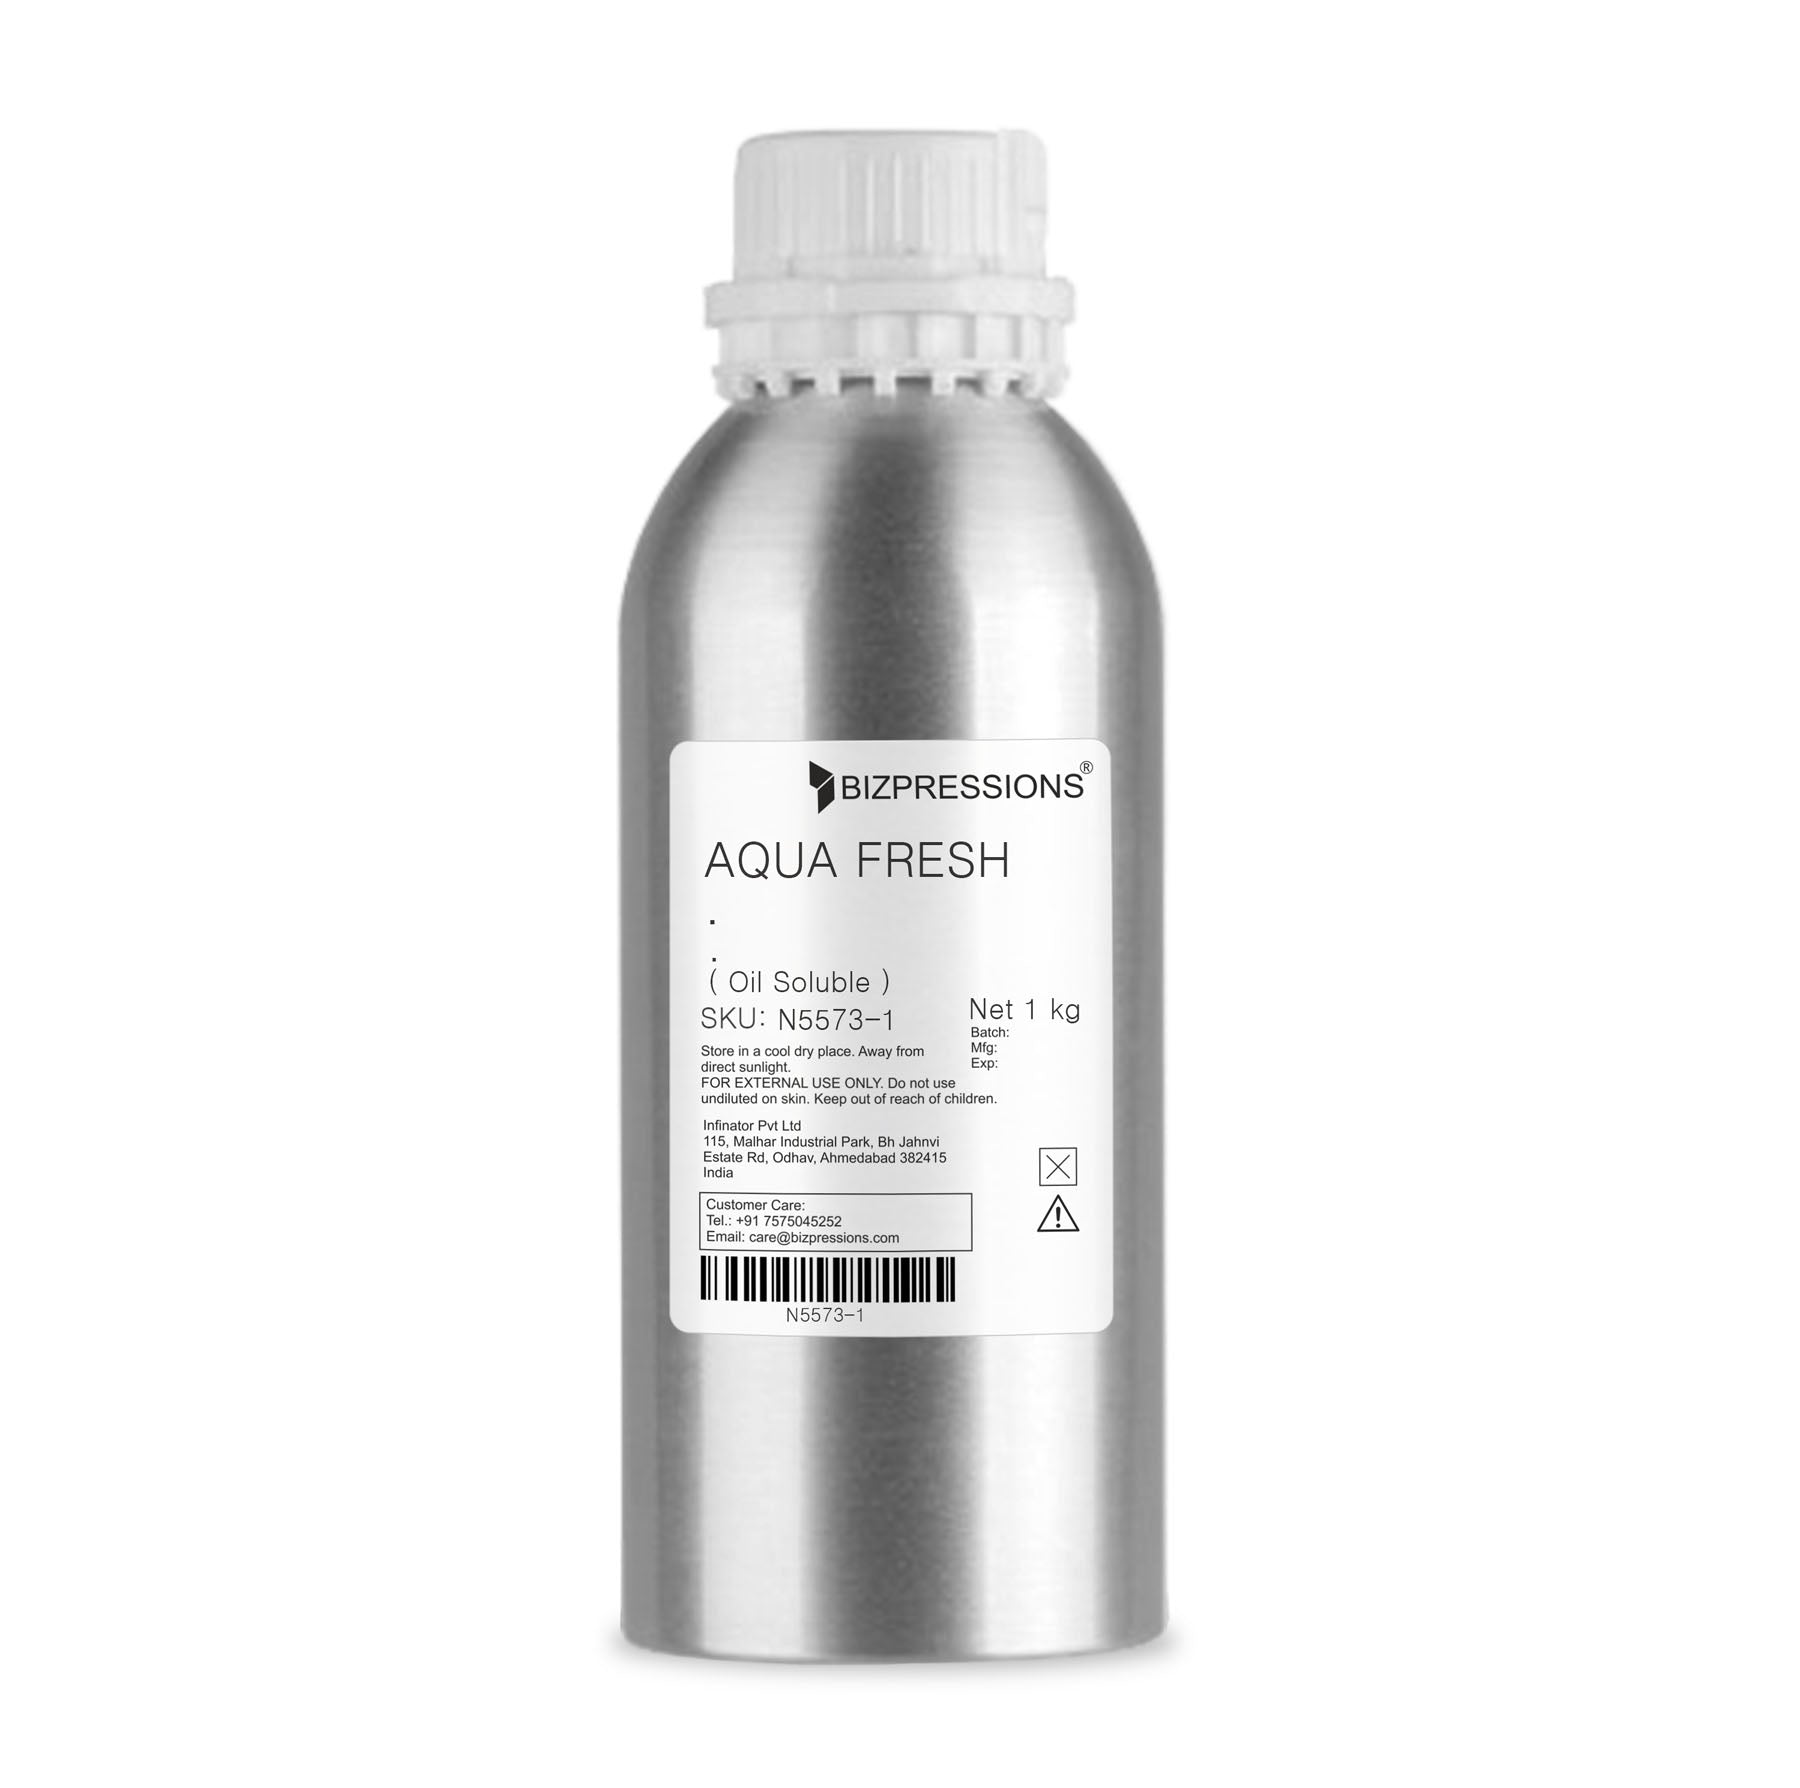 AQUA FRESH - Fragrance ( Oil Soluble ) - 1 kg